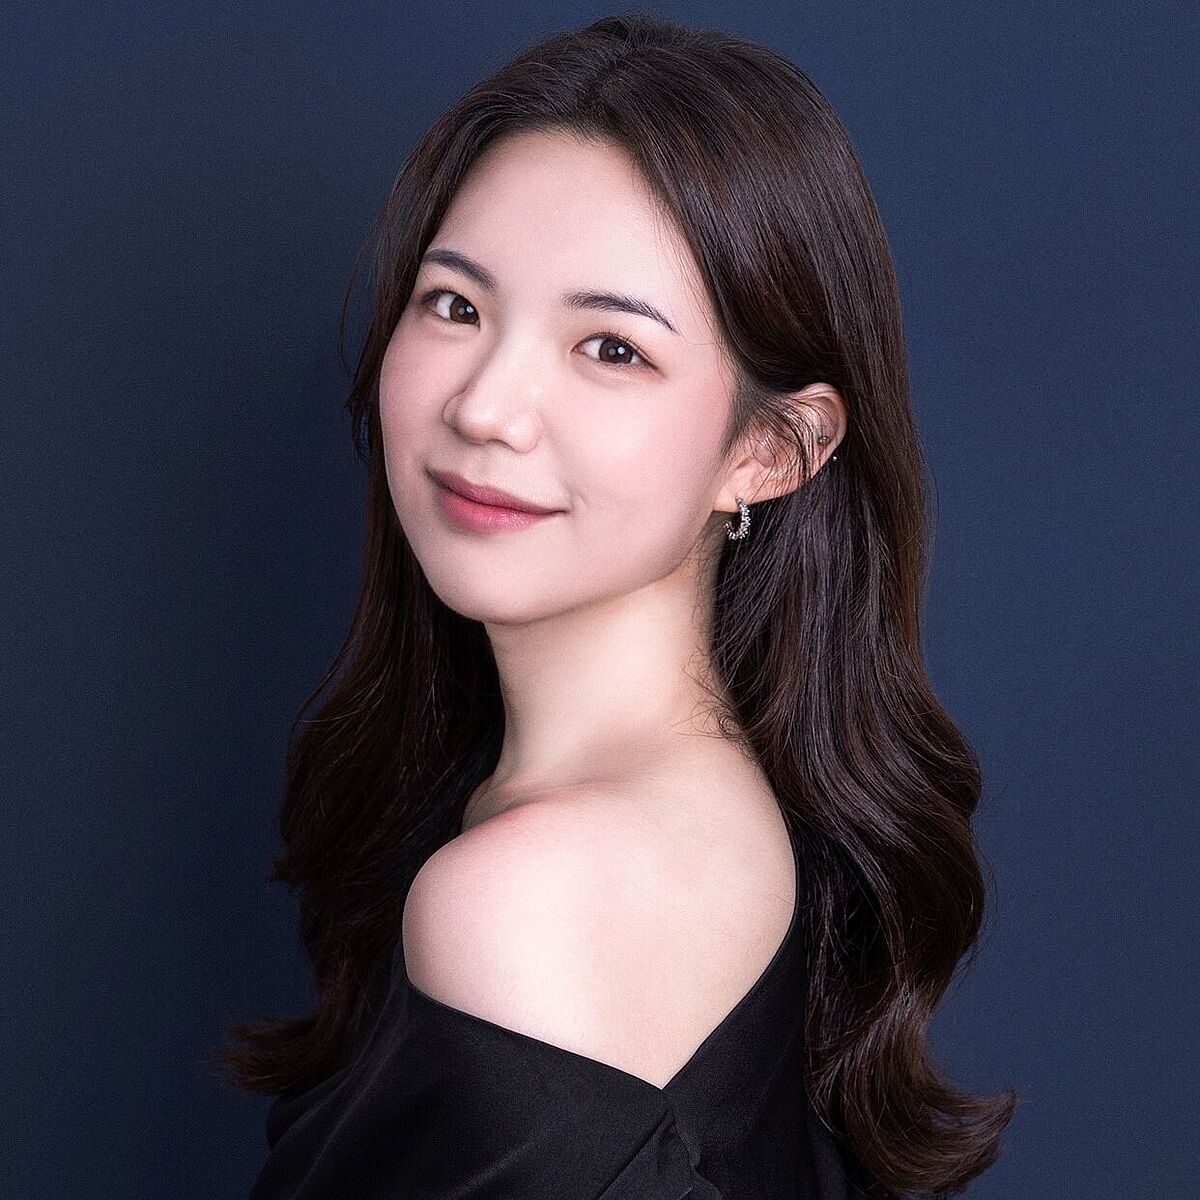 Die Opernstudio-Studentin Soobhin Kim